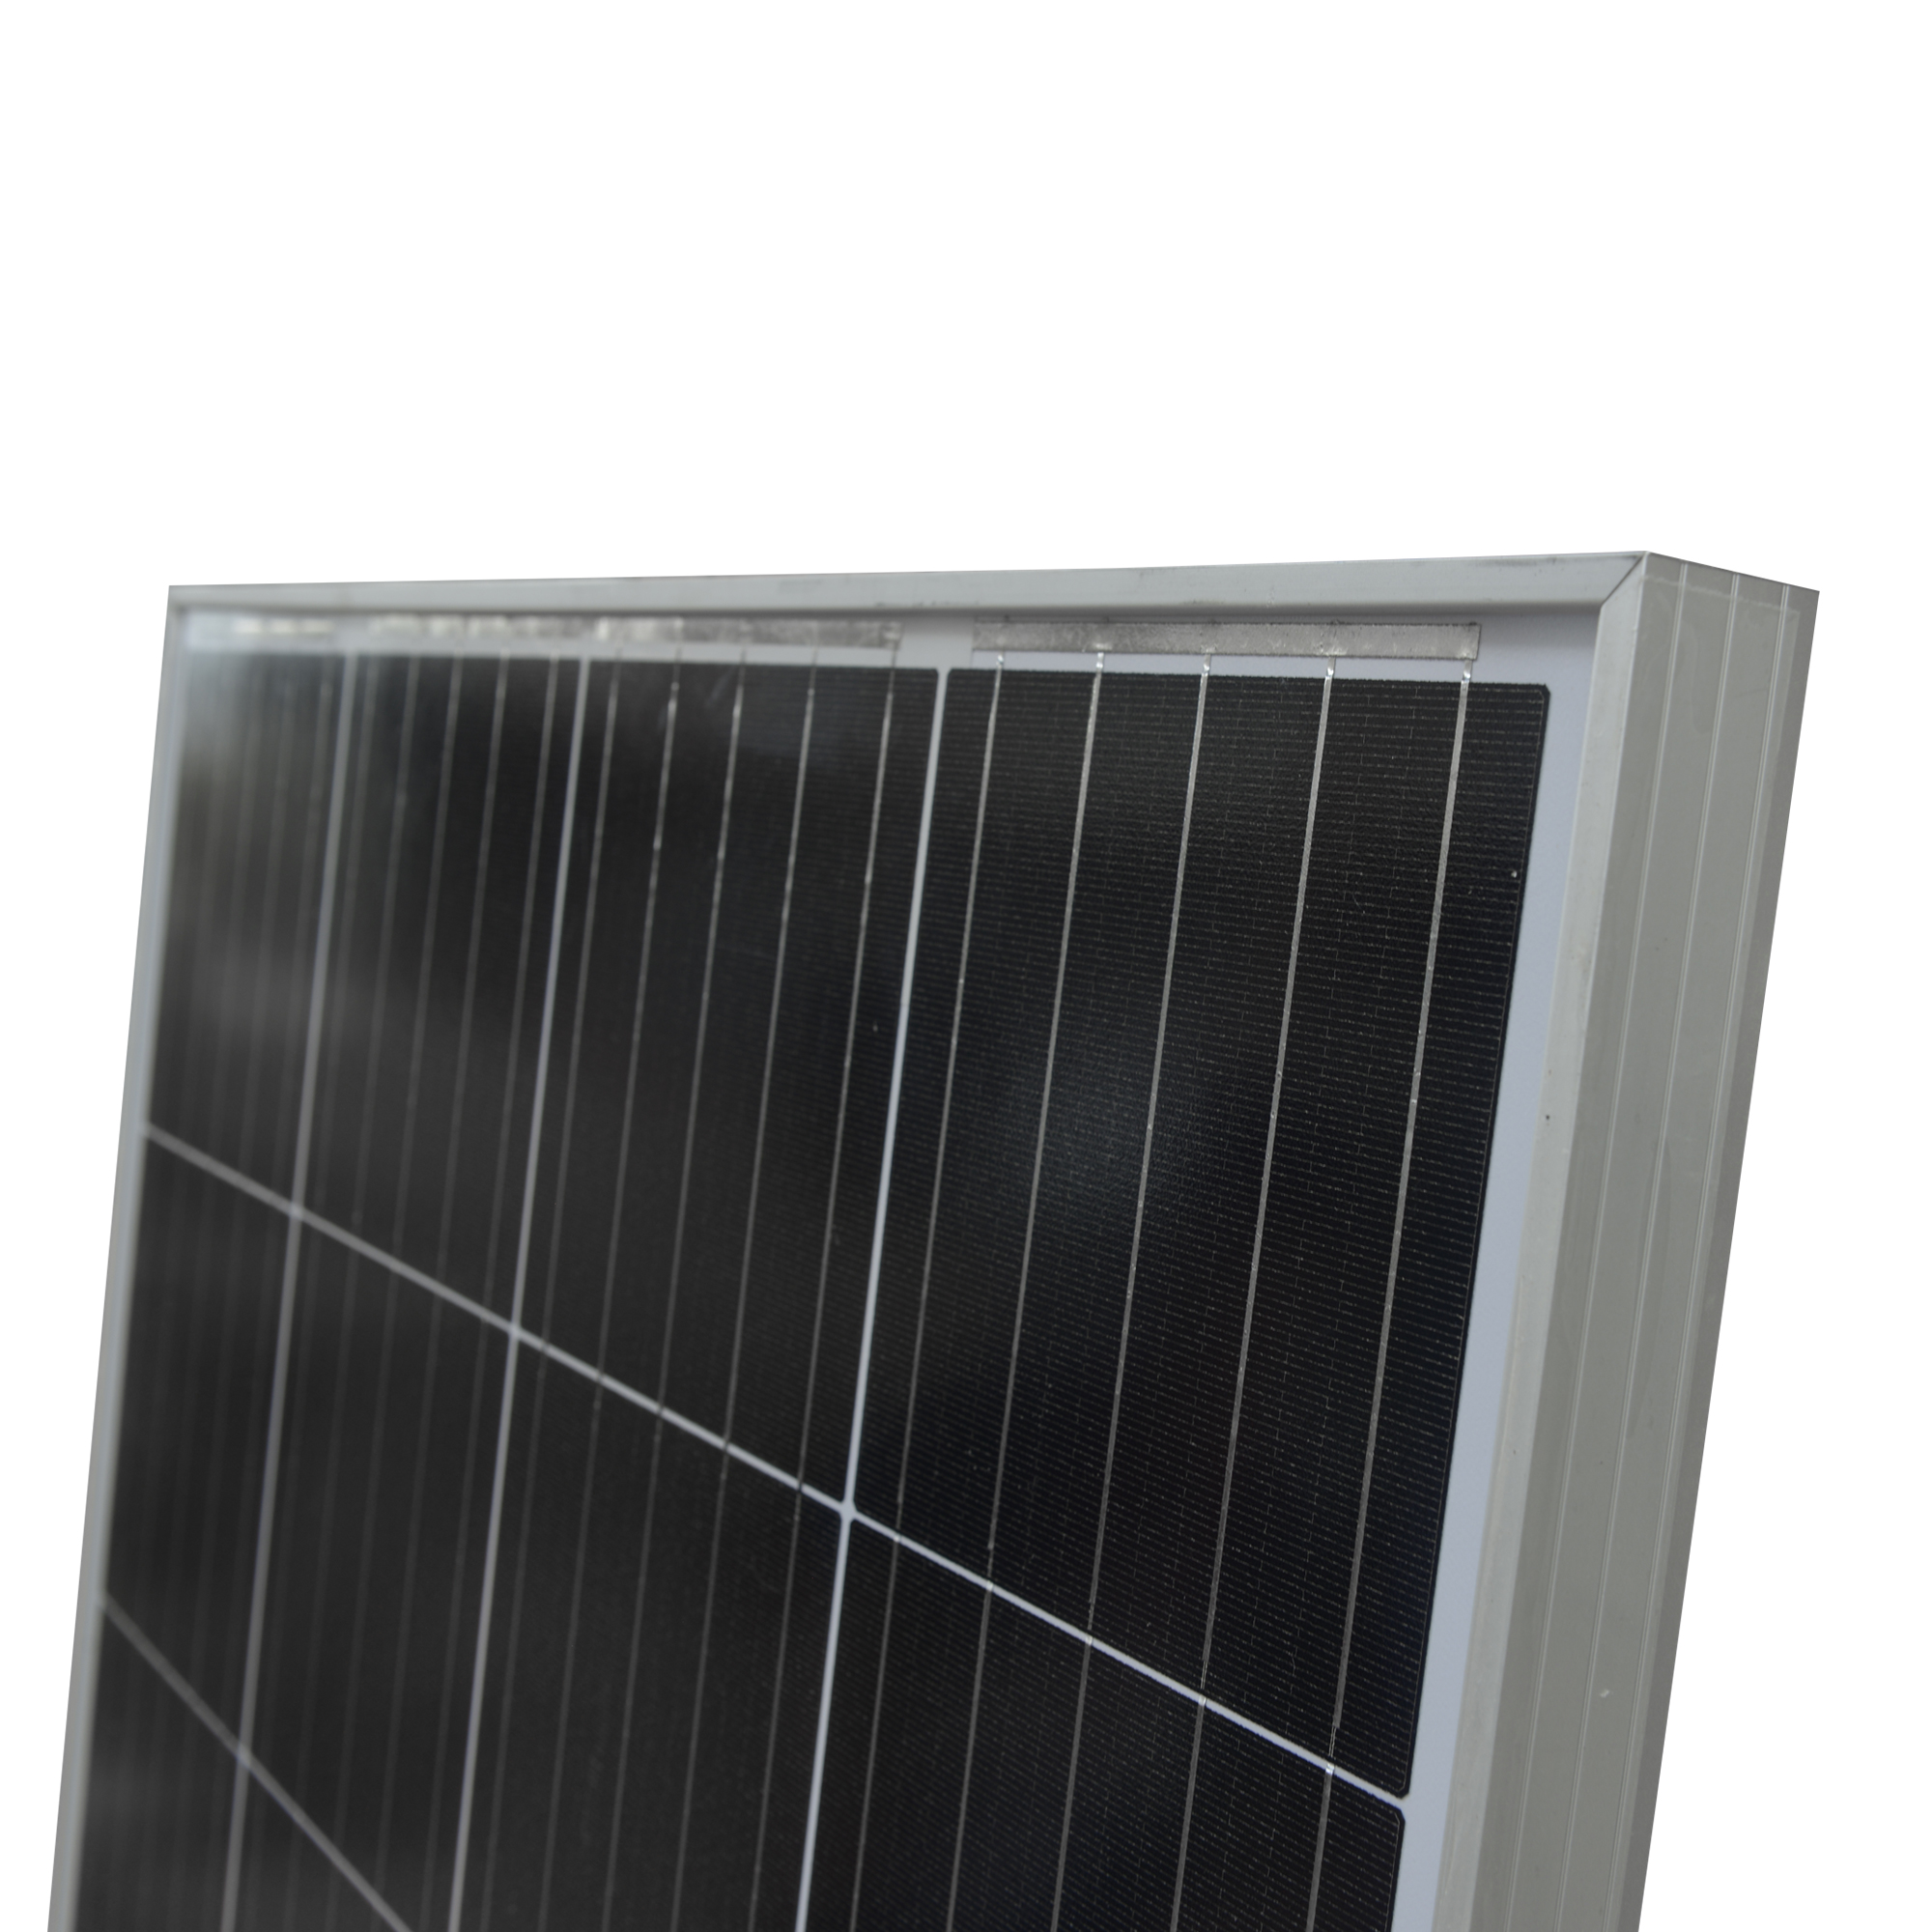 wholesale 180w 18v monocrystalline solar panel kits for rv